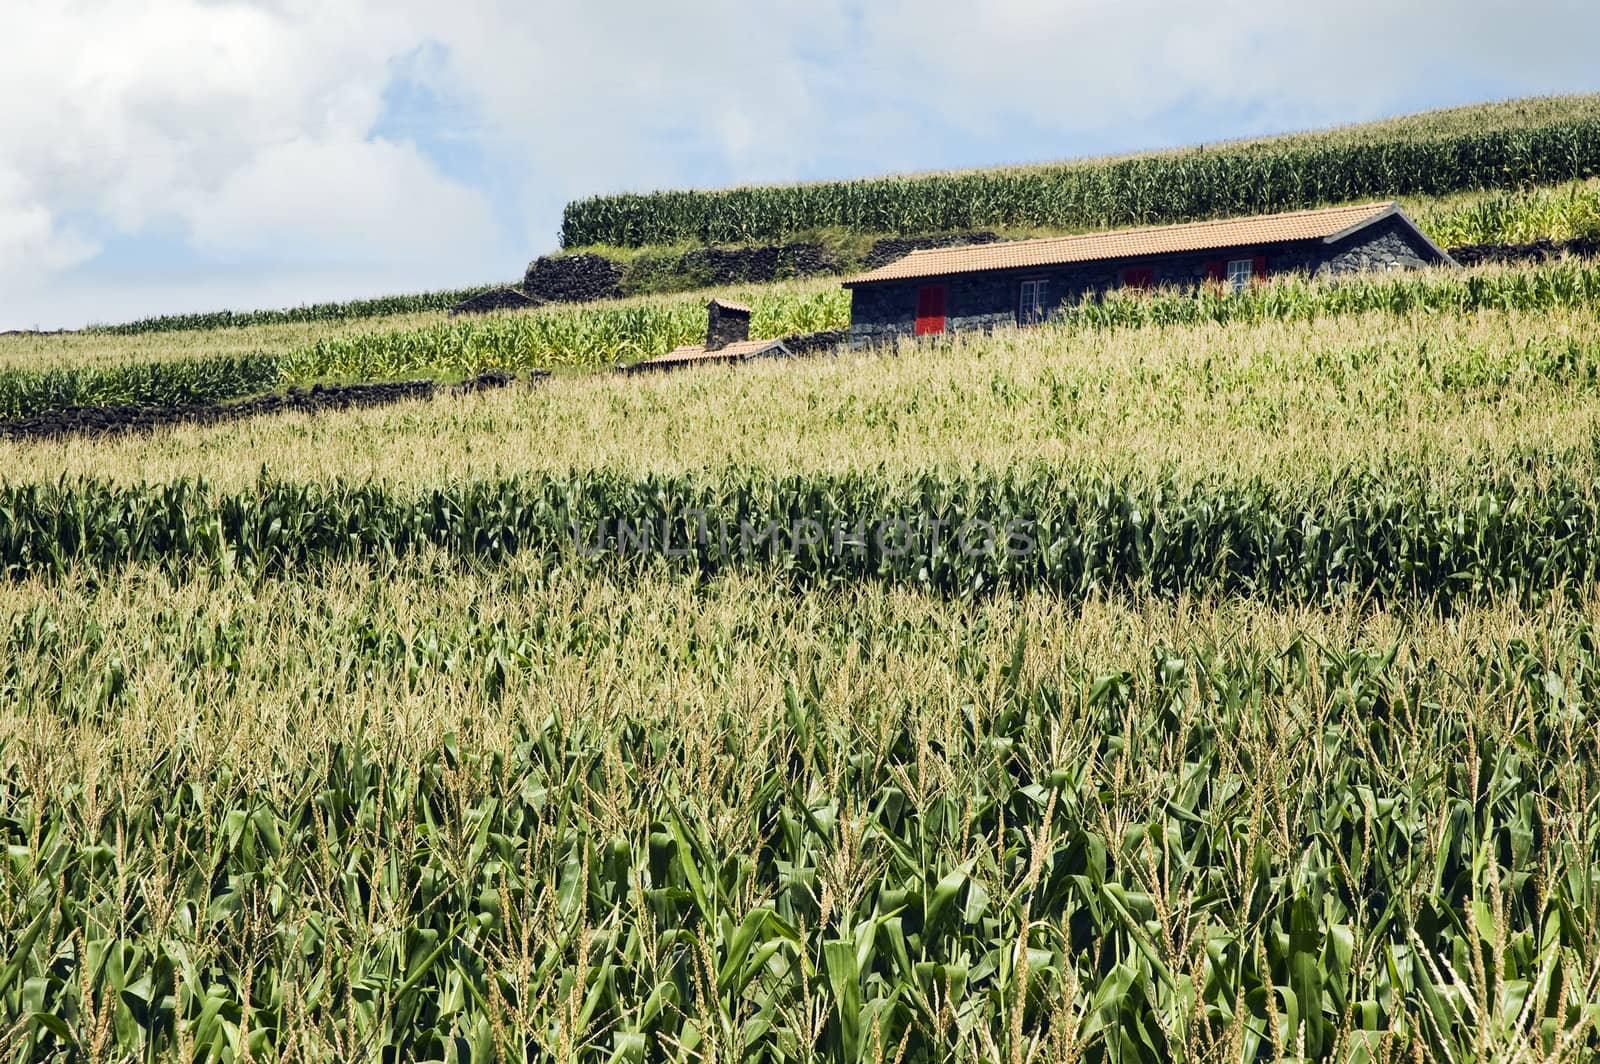 House in a corn field by mrfotos